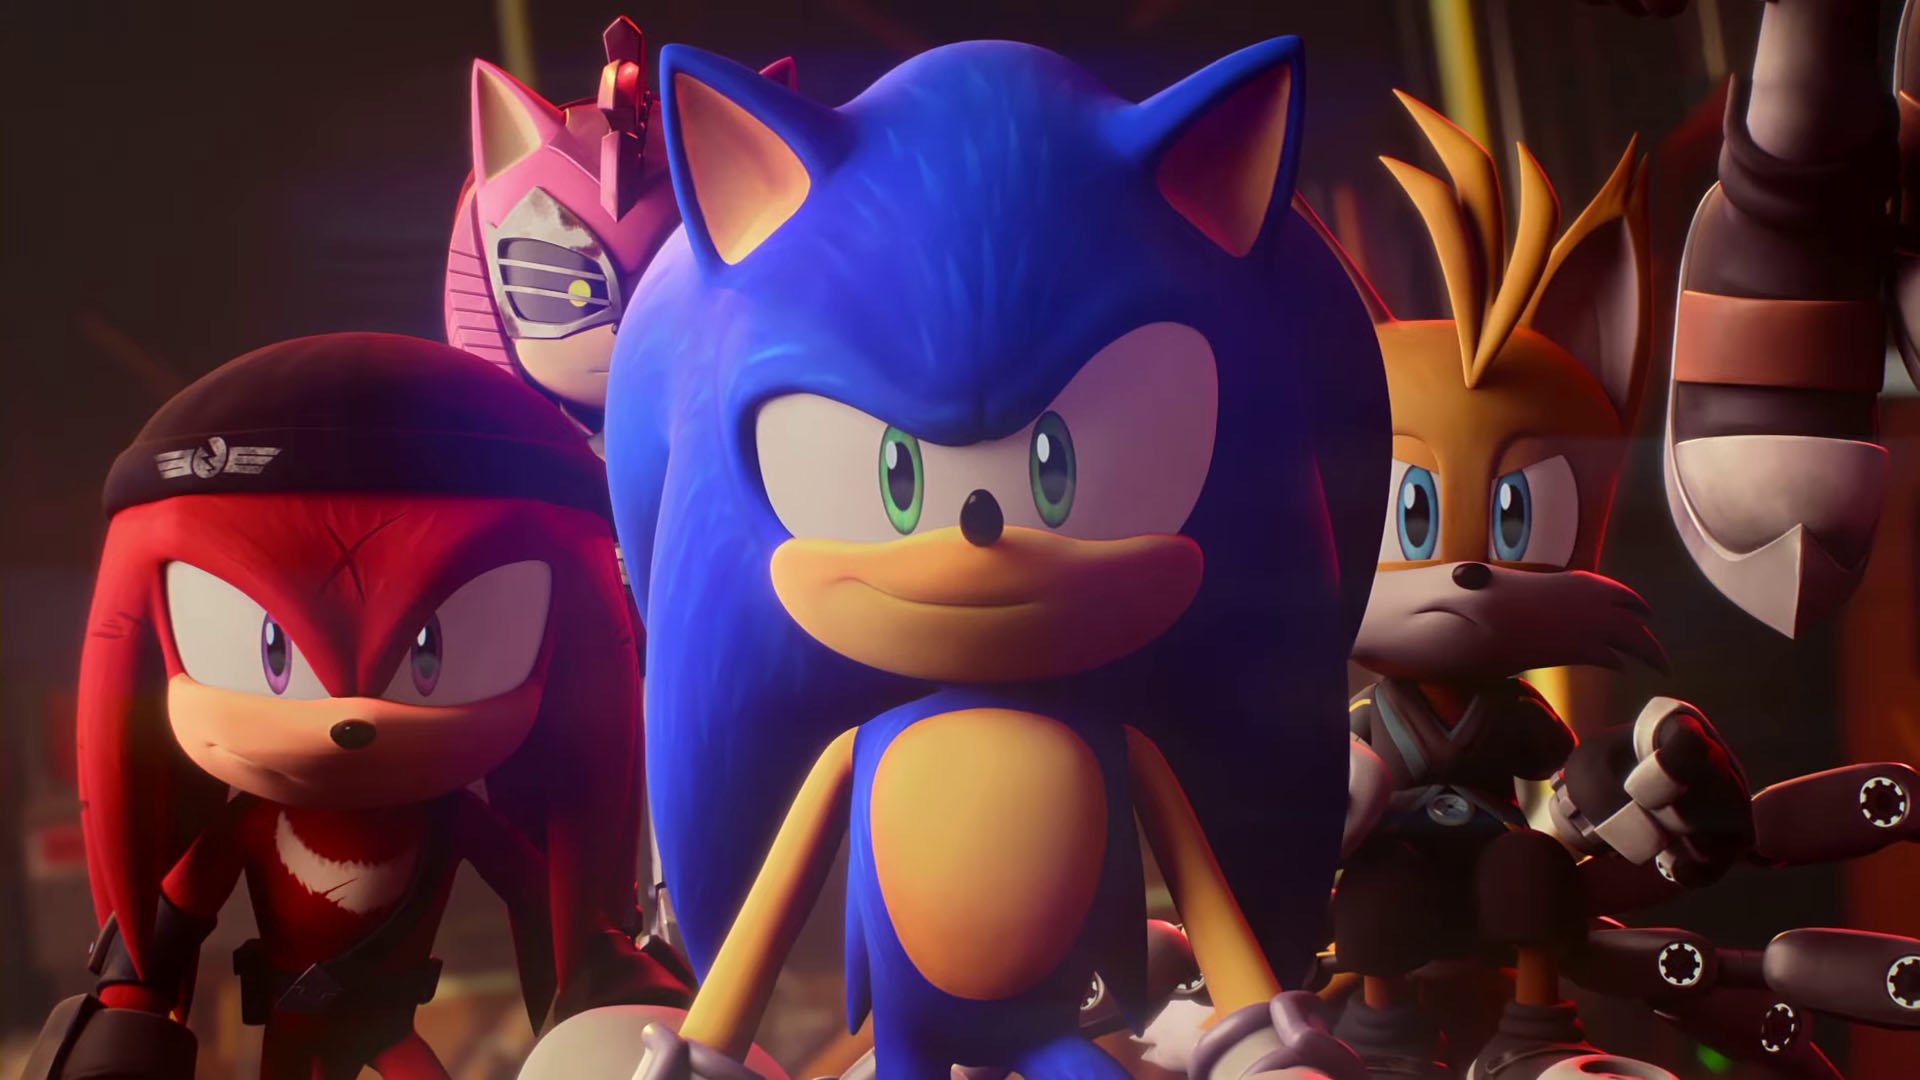 Sonic Prime premieres December 15 - Gematsu